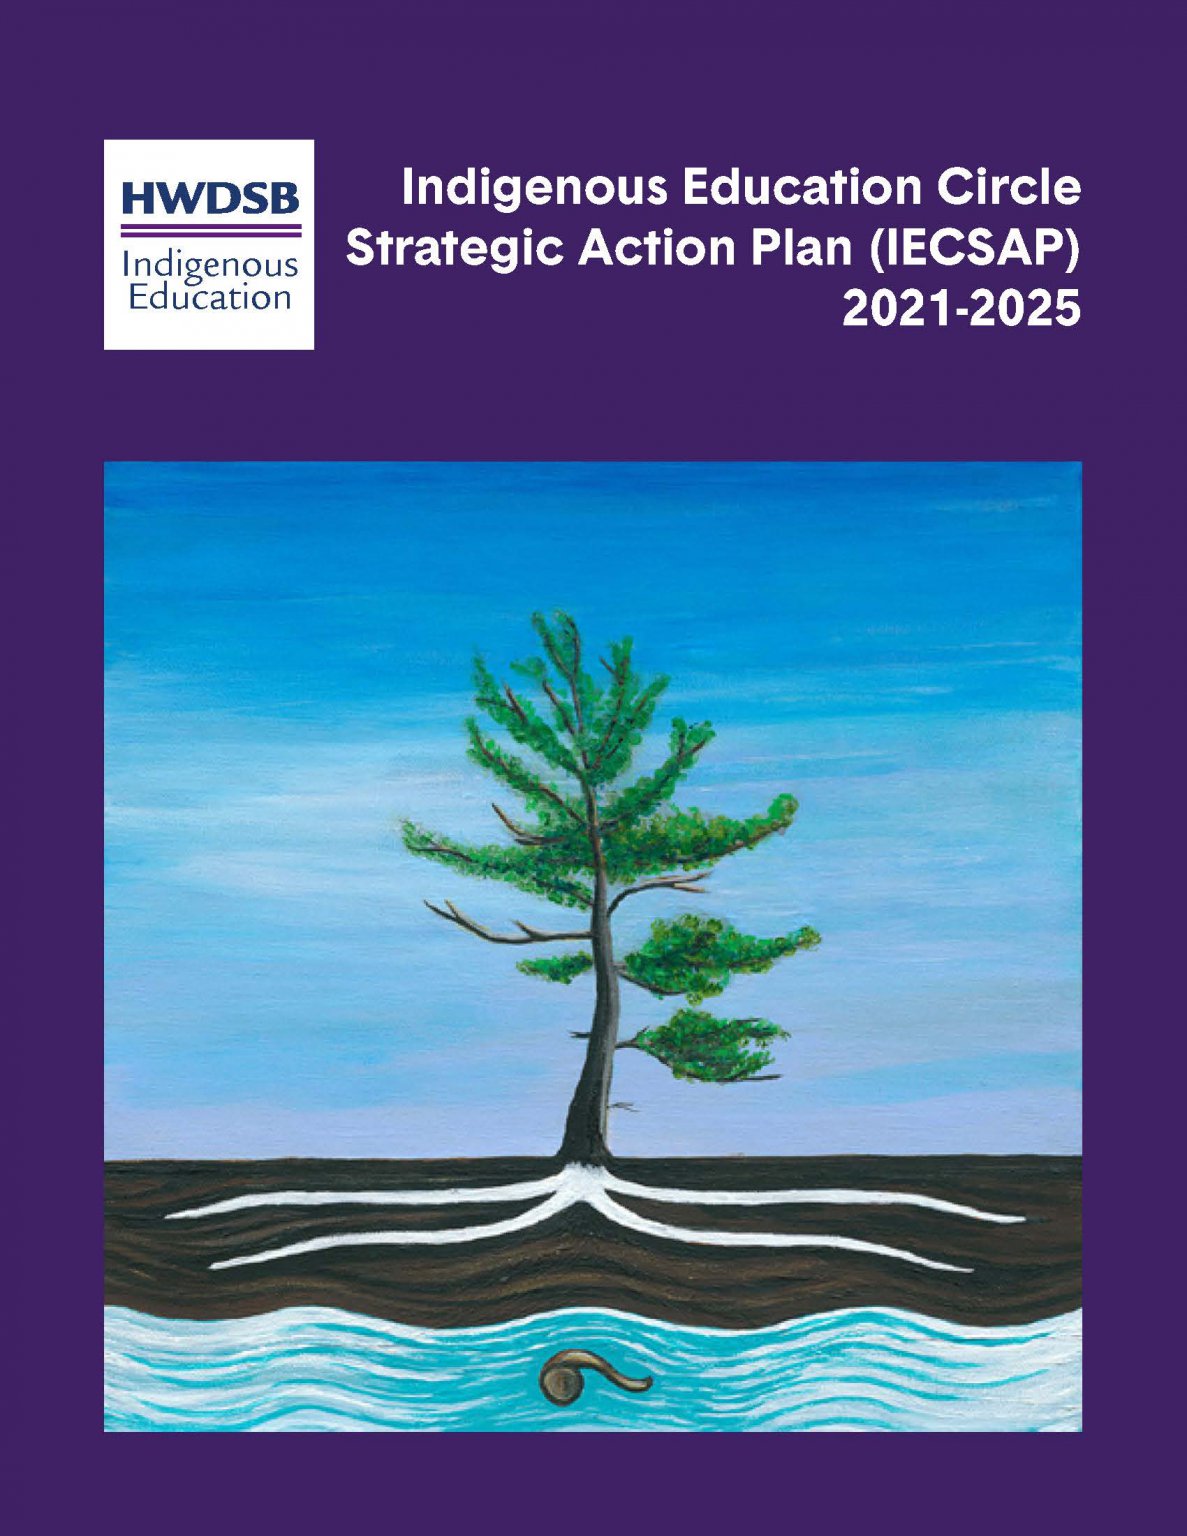 Indigenous Education Circle Strategic Action Plan Guides Work at HWDSB